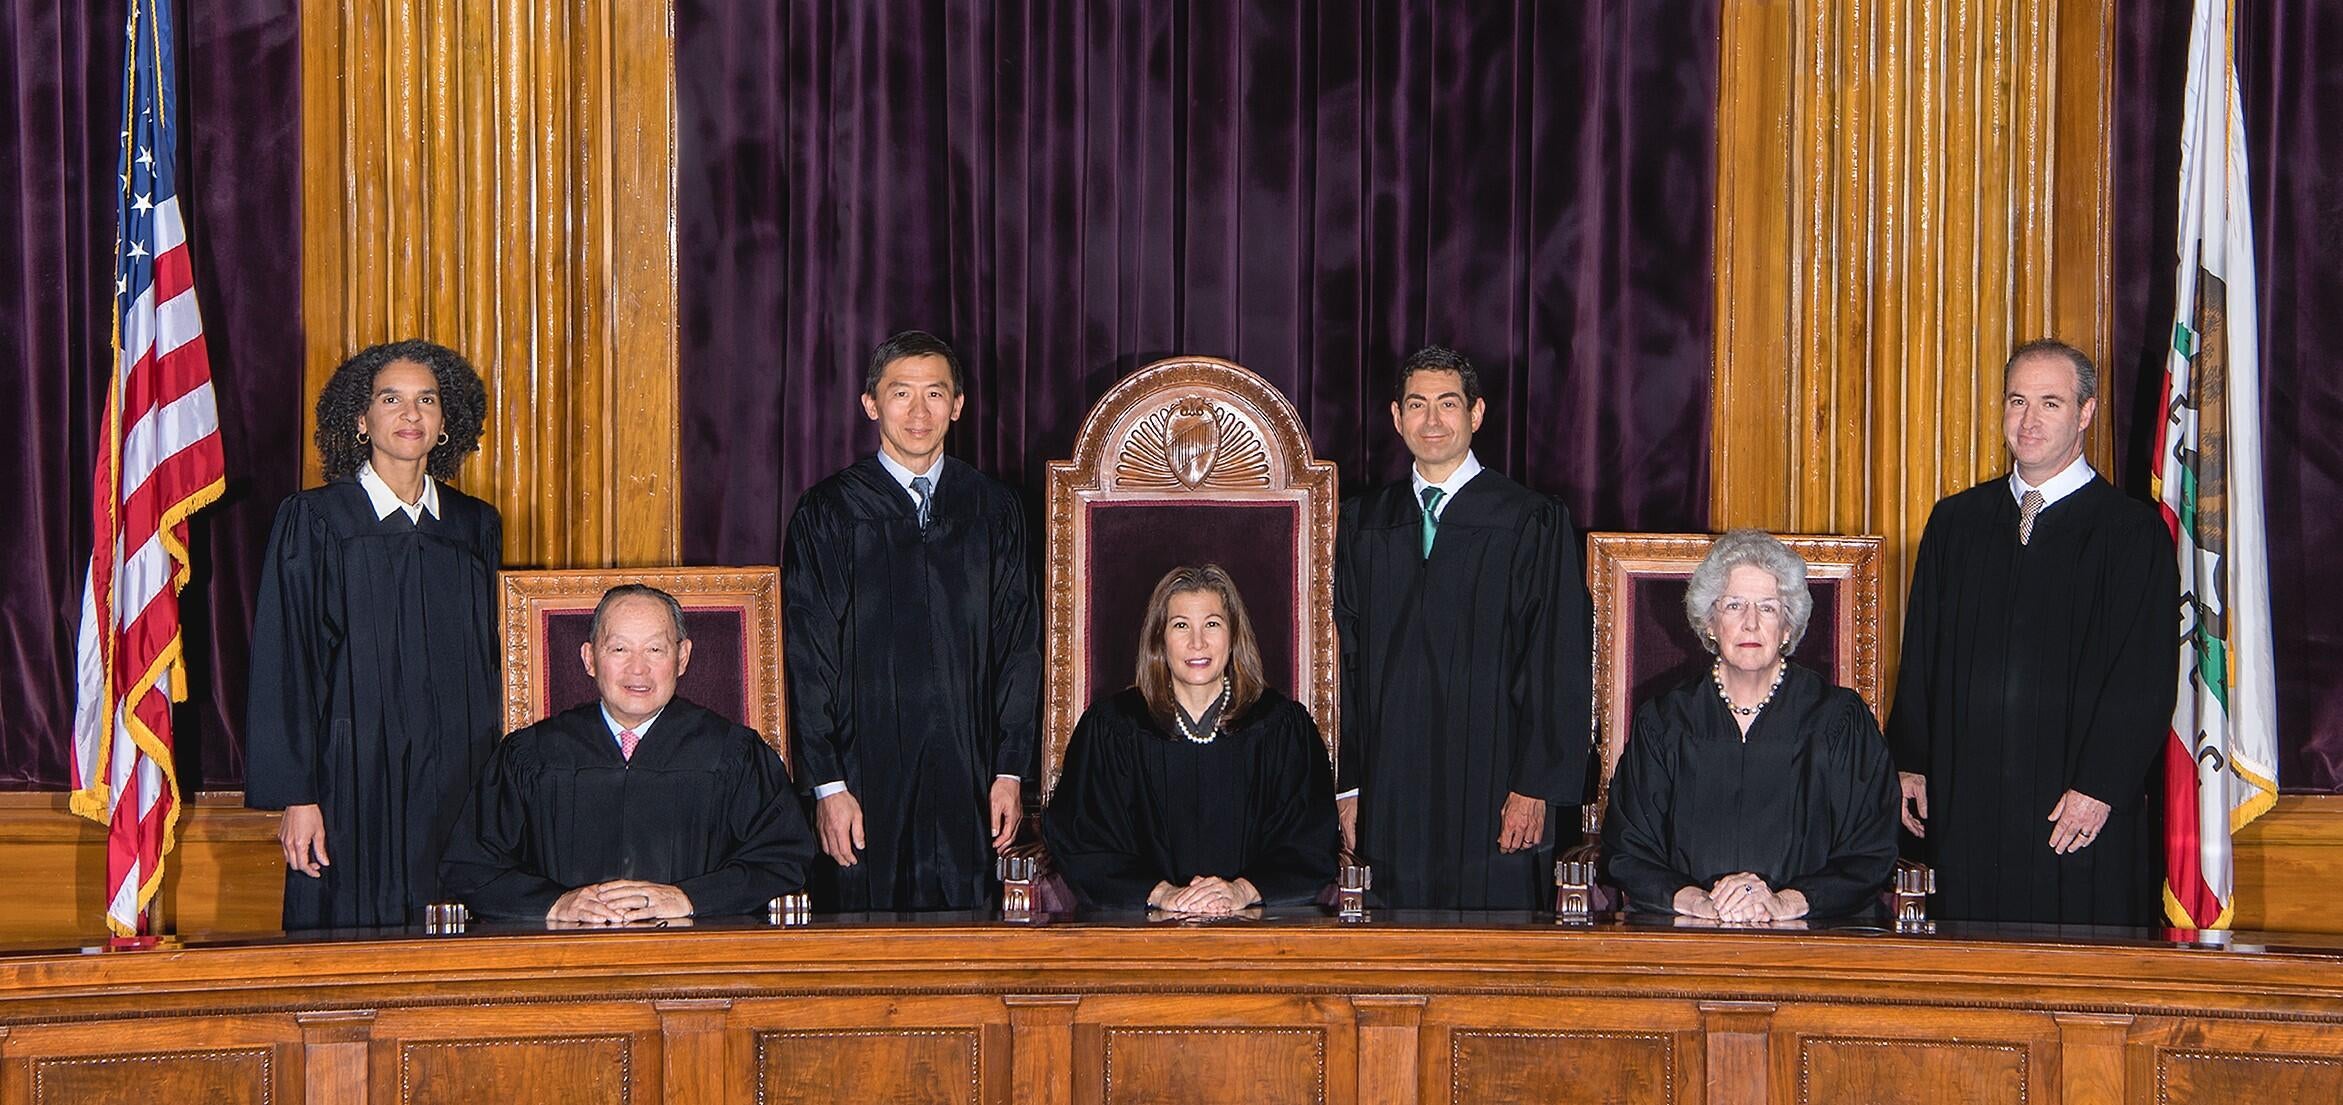 Official bench photo of justices kruger, chin, liu, cantil-sakauye, cuellar, corrigan, and groban